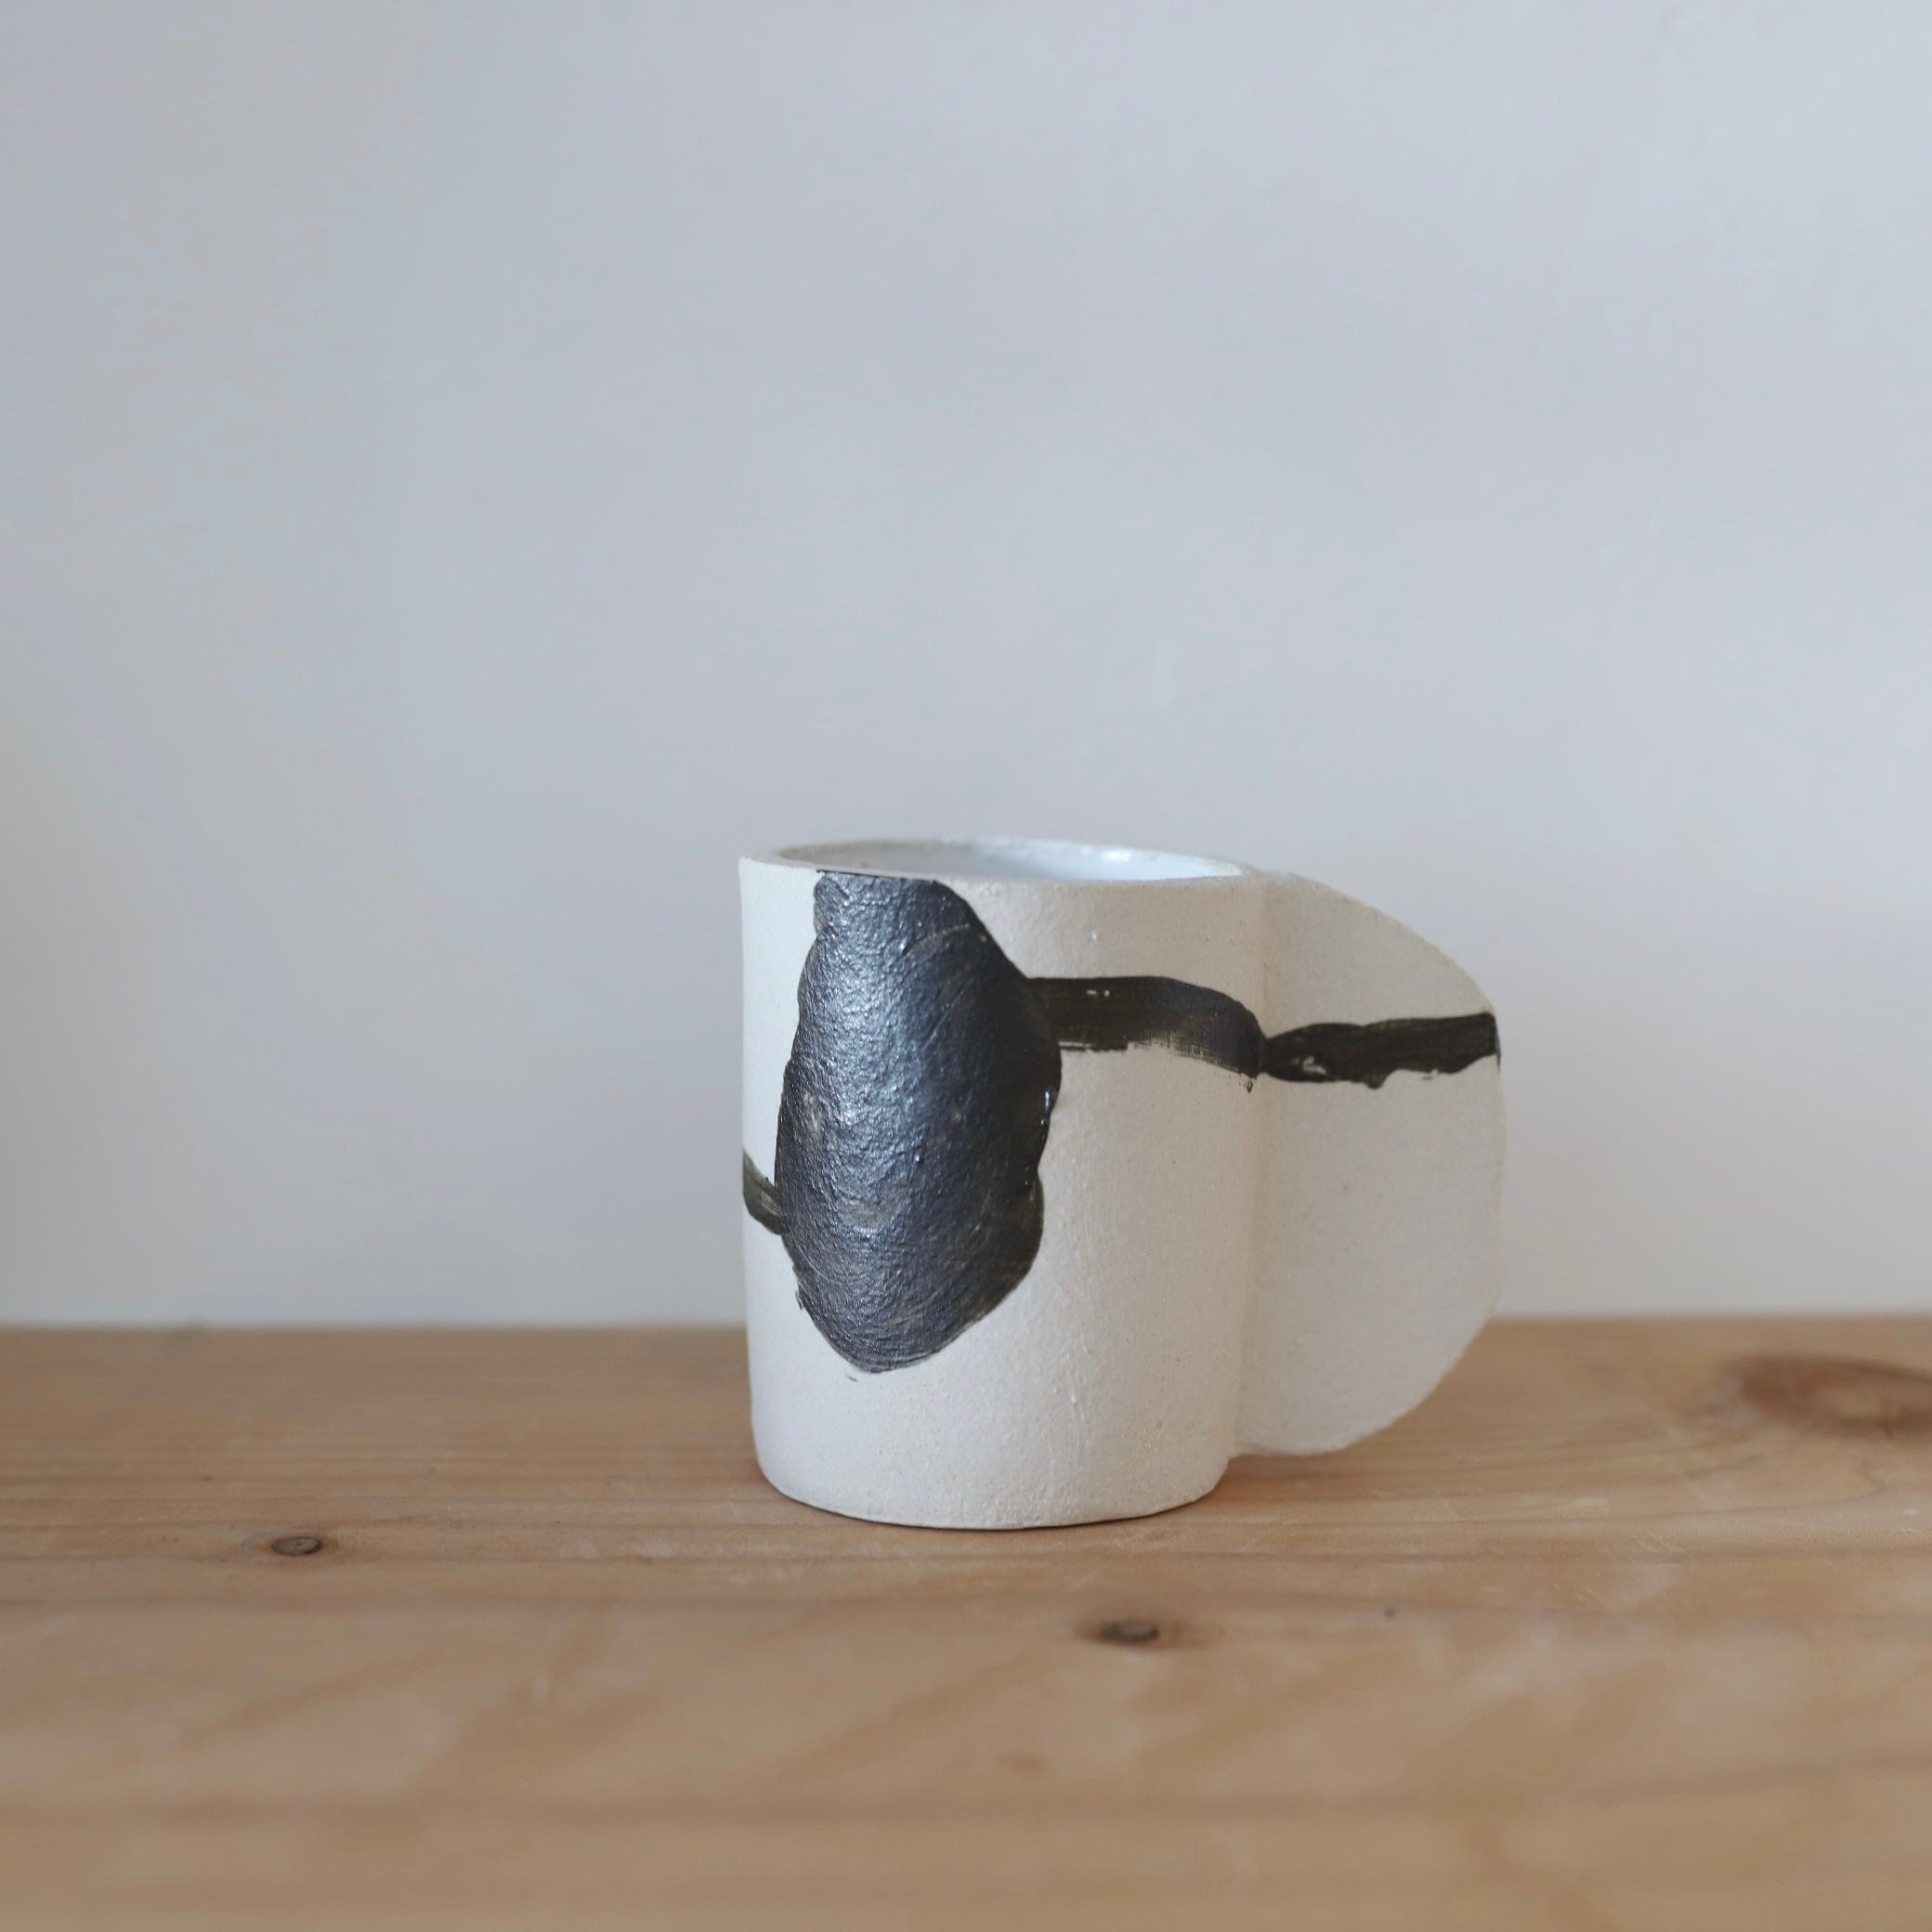 Heyja Do Kitchen A. Hand Sculpted Patterned Ceramic Mugs | Heyja Do